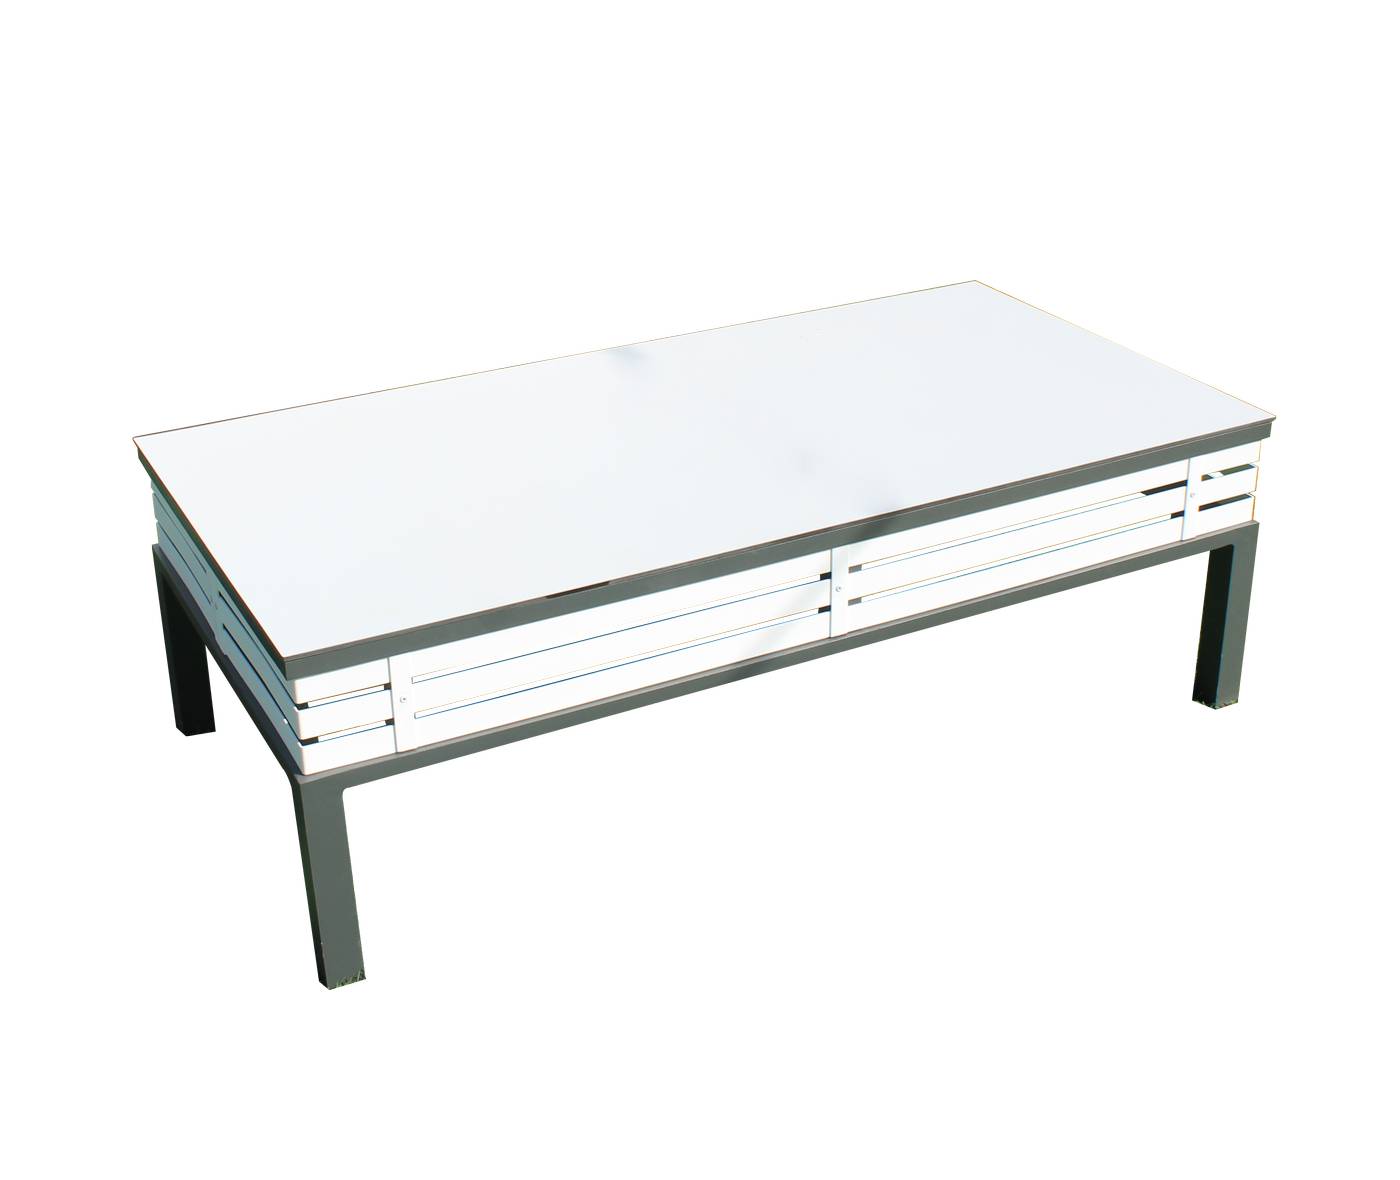 Set Aluminio Luxe Diva-7 - Lujoso conjunto de alumnio bicolor: 1 sofá de 2 plazas + 2 sillones + 1 mesa de centro.